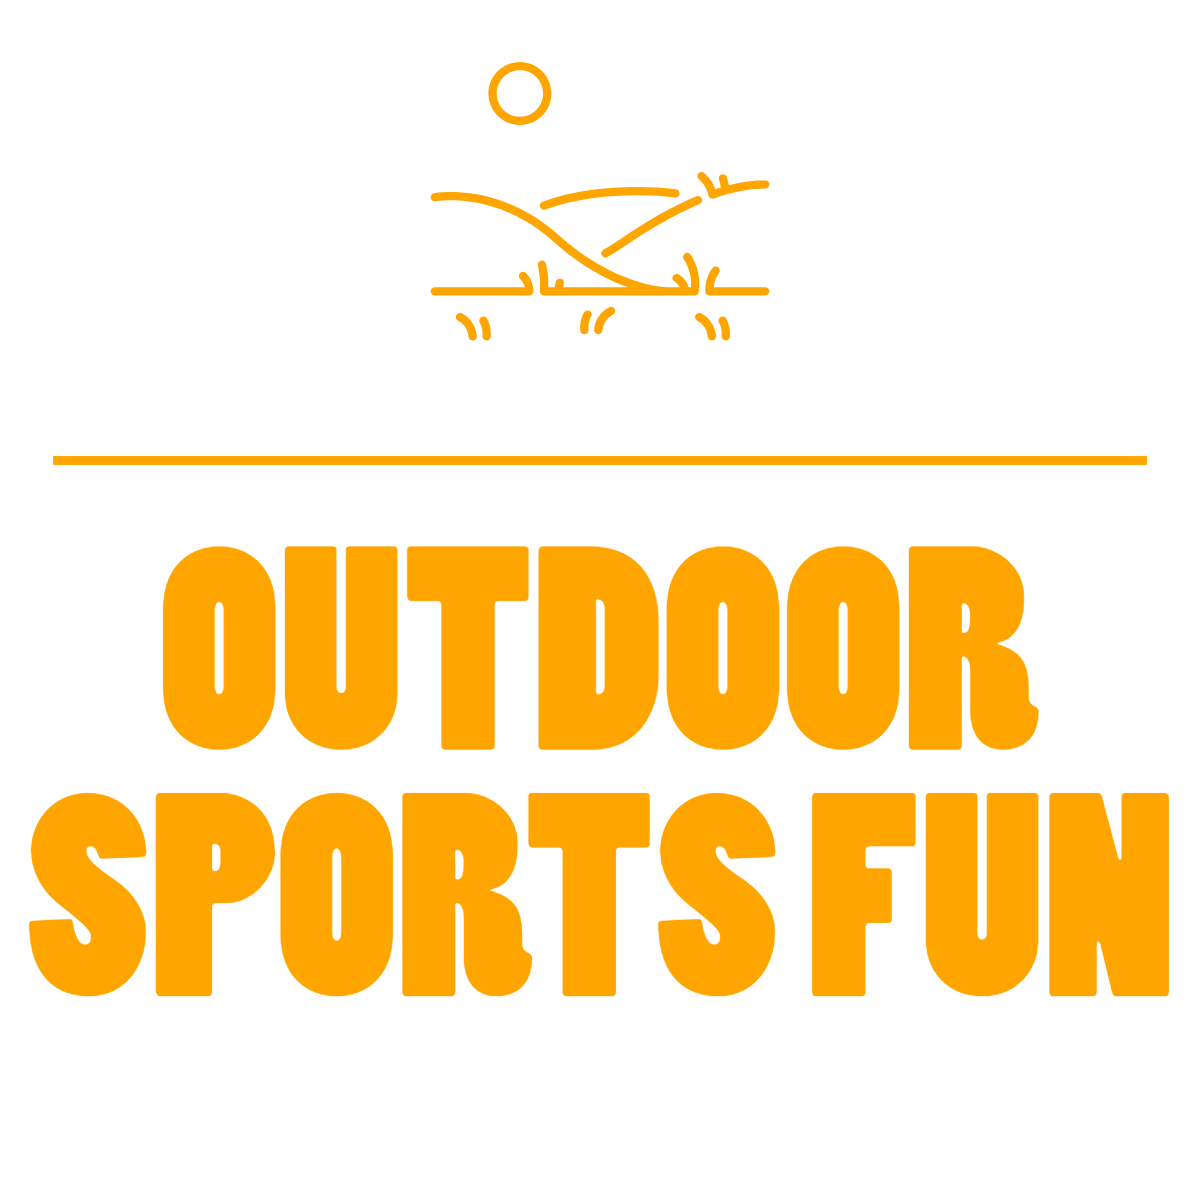 The Outdoor Sports Fun Blog